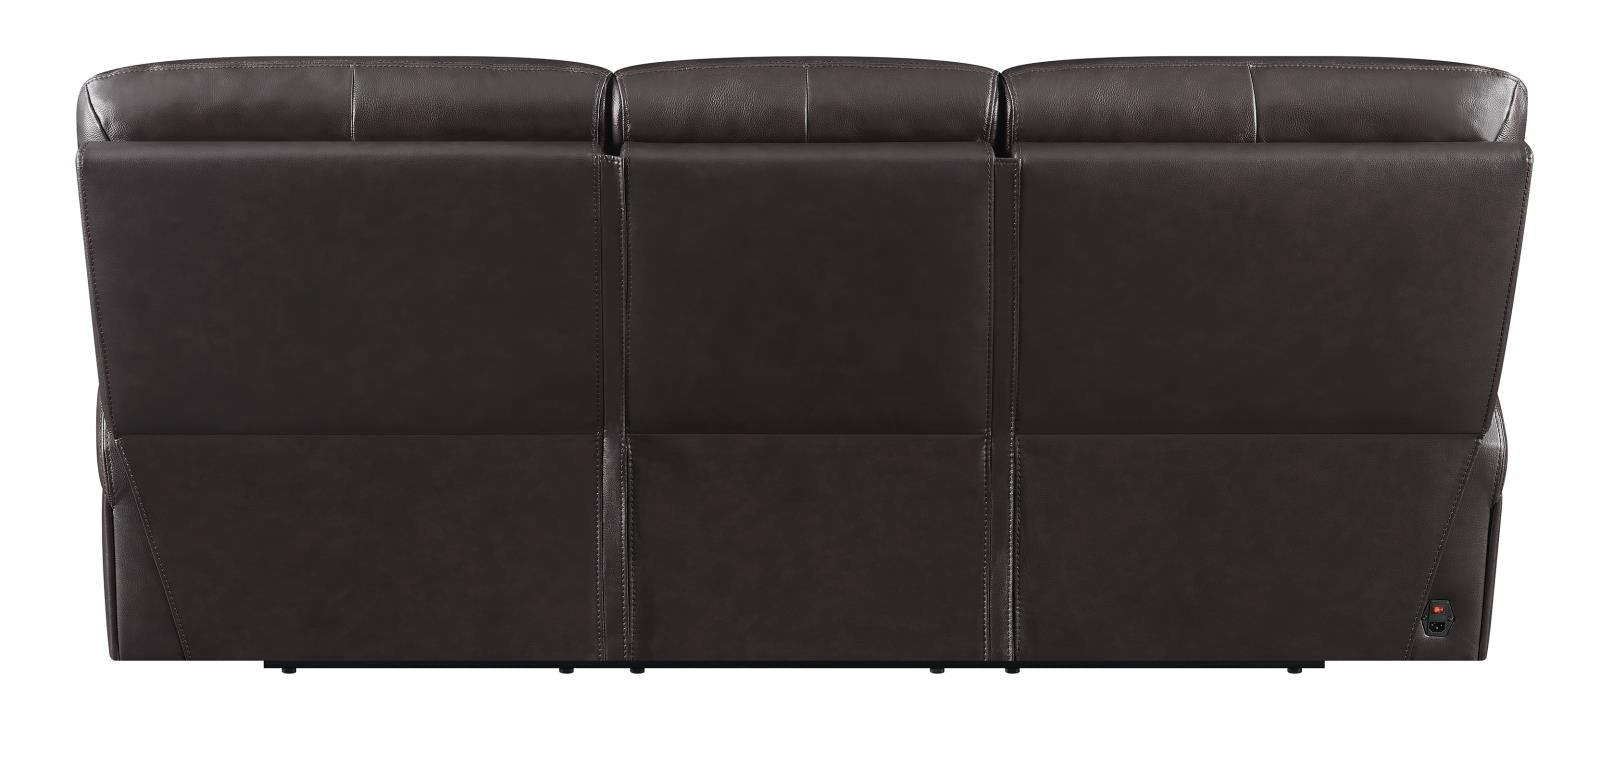 Longport Upholstered Power Sofa Dark Brown - What A Room